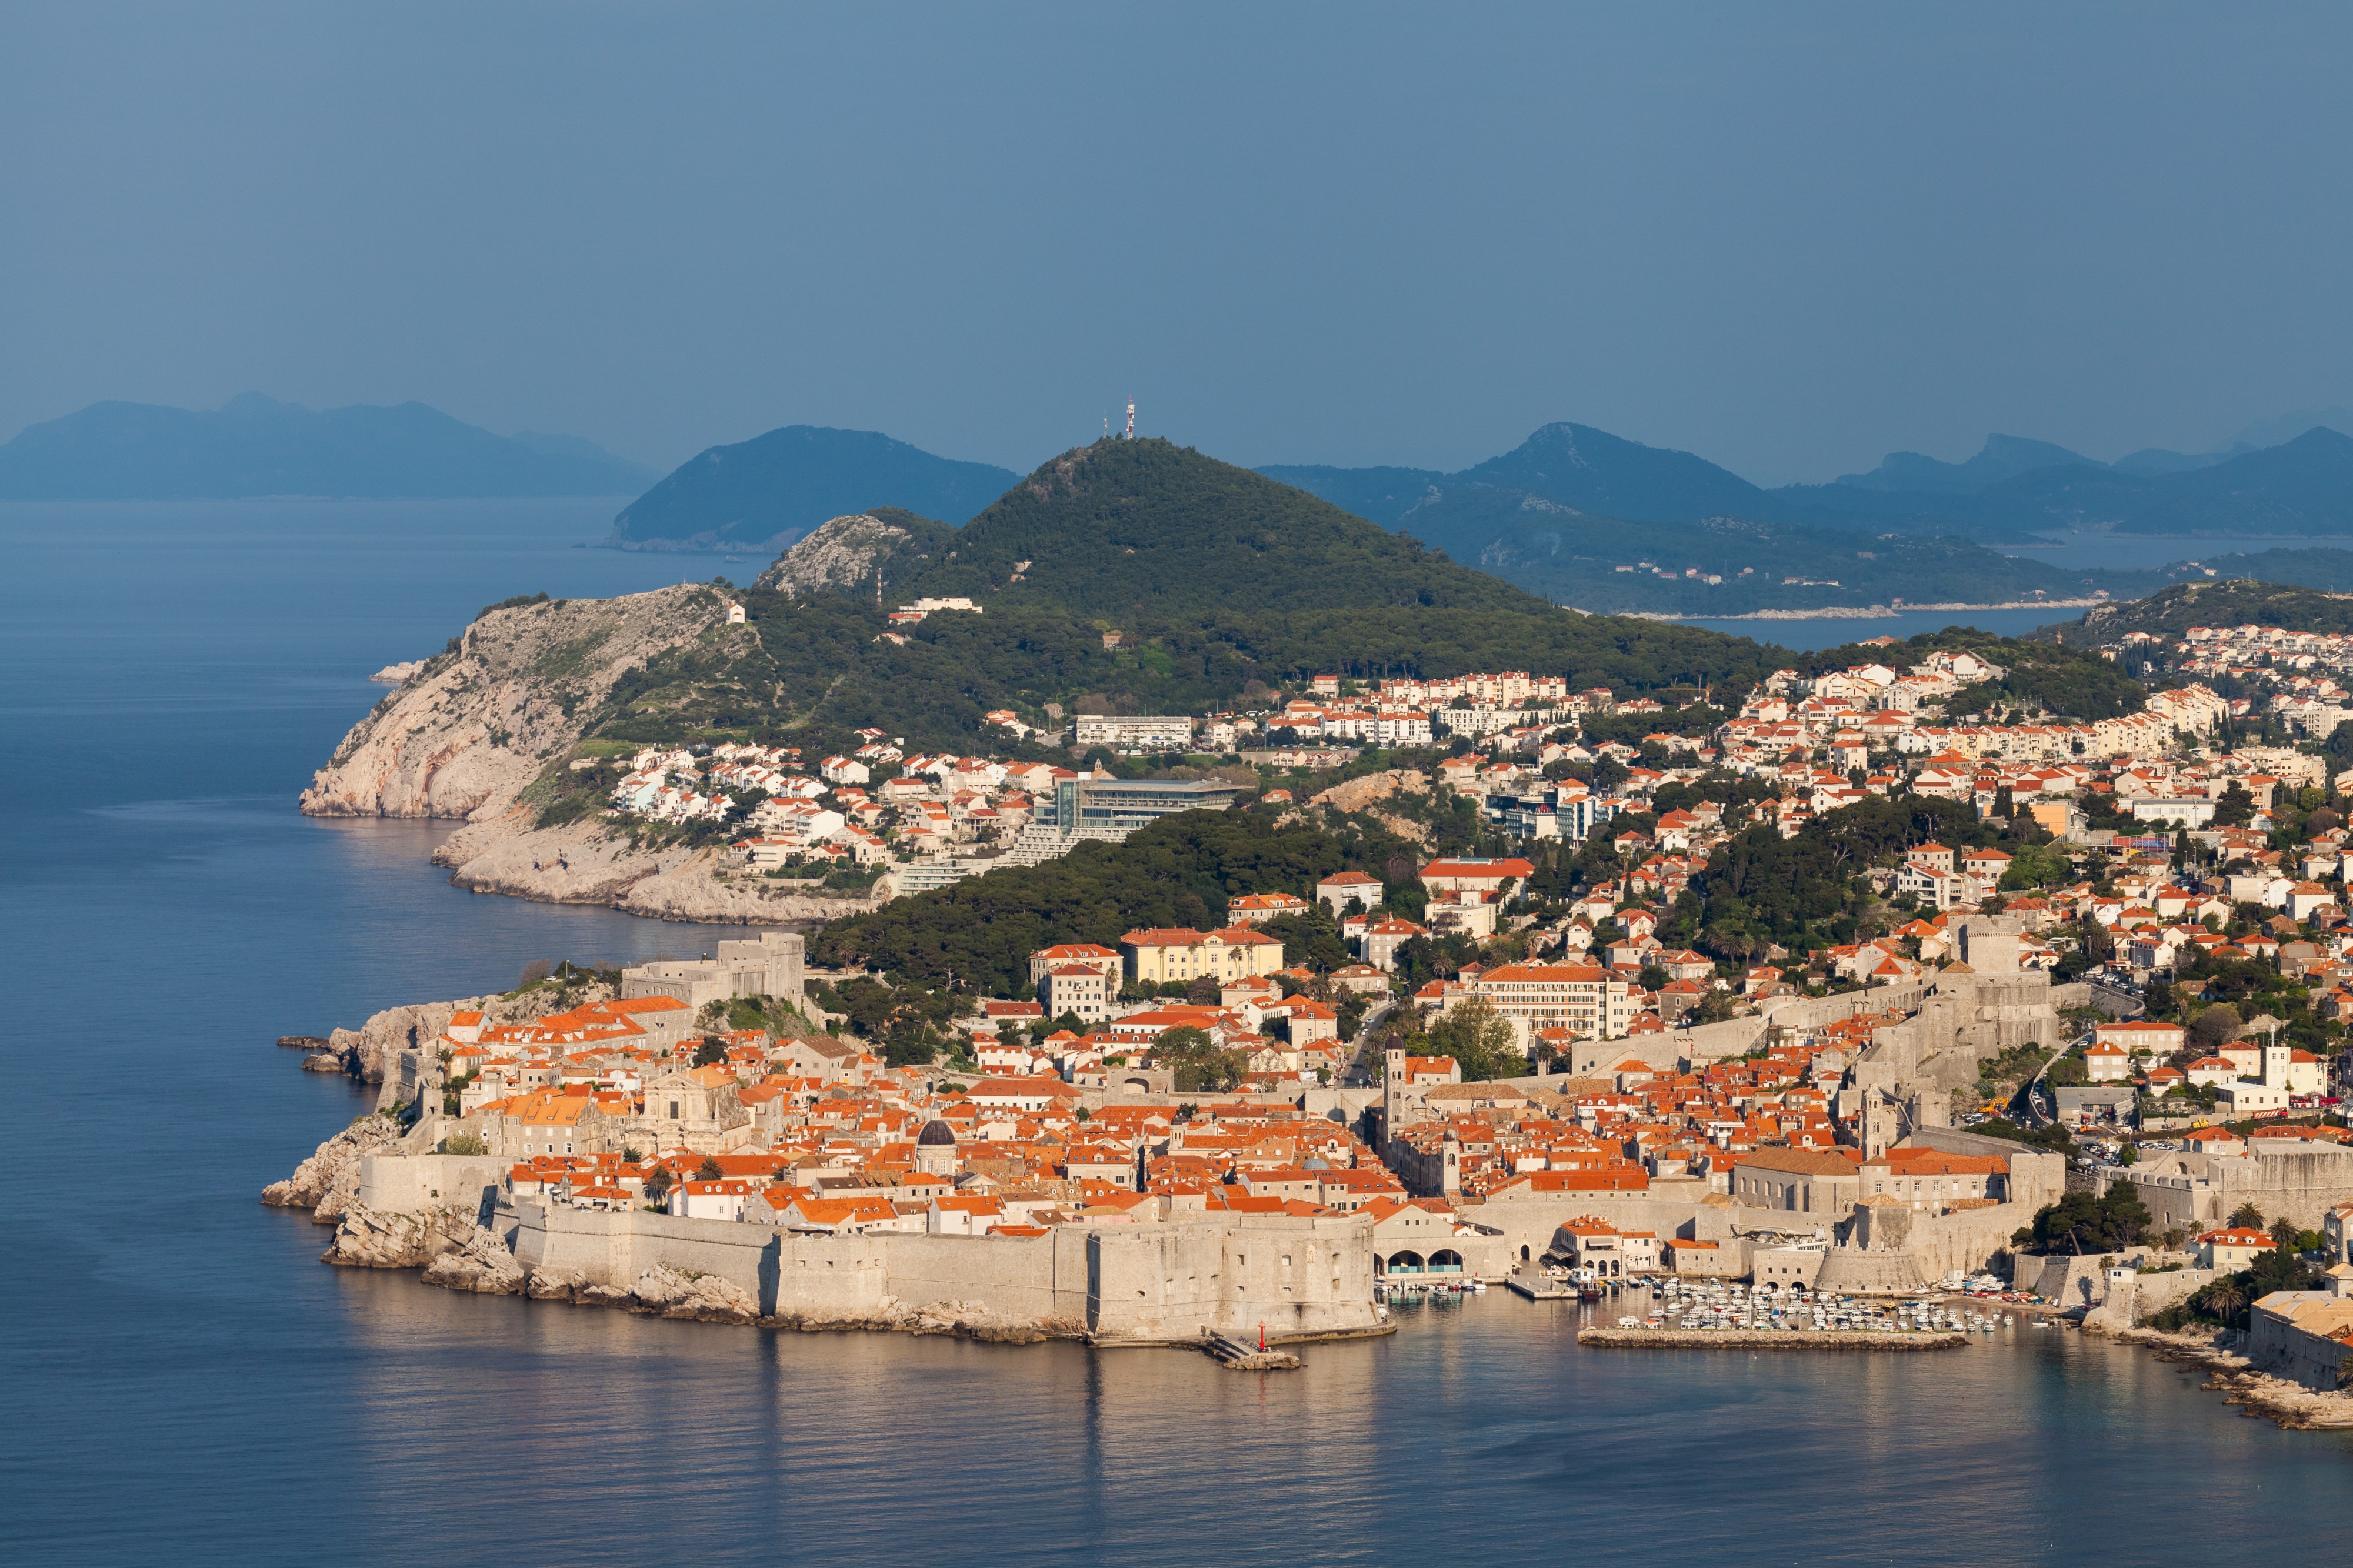 Casco viejo de Dubrovnik, Croacia, 2014-04-14, DD 11